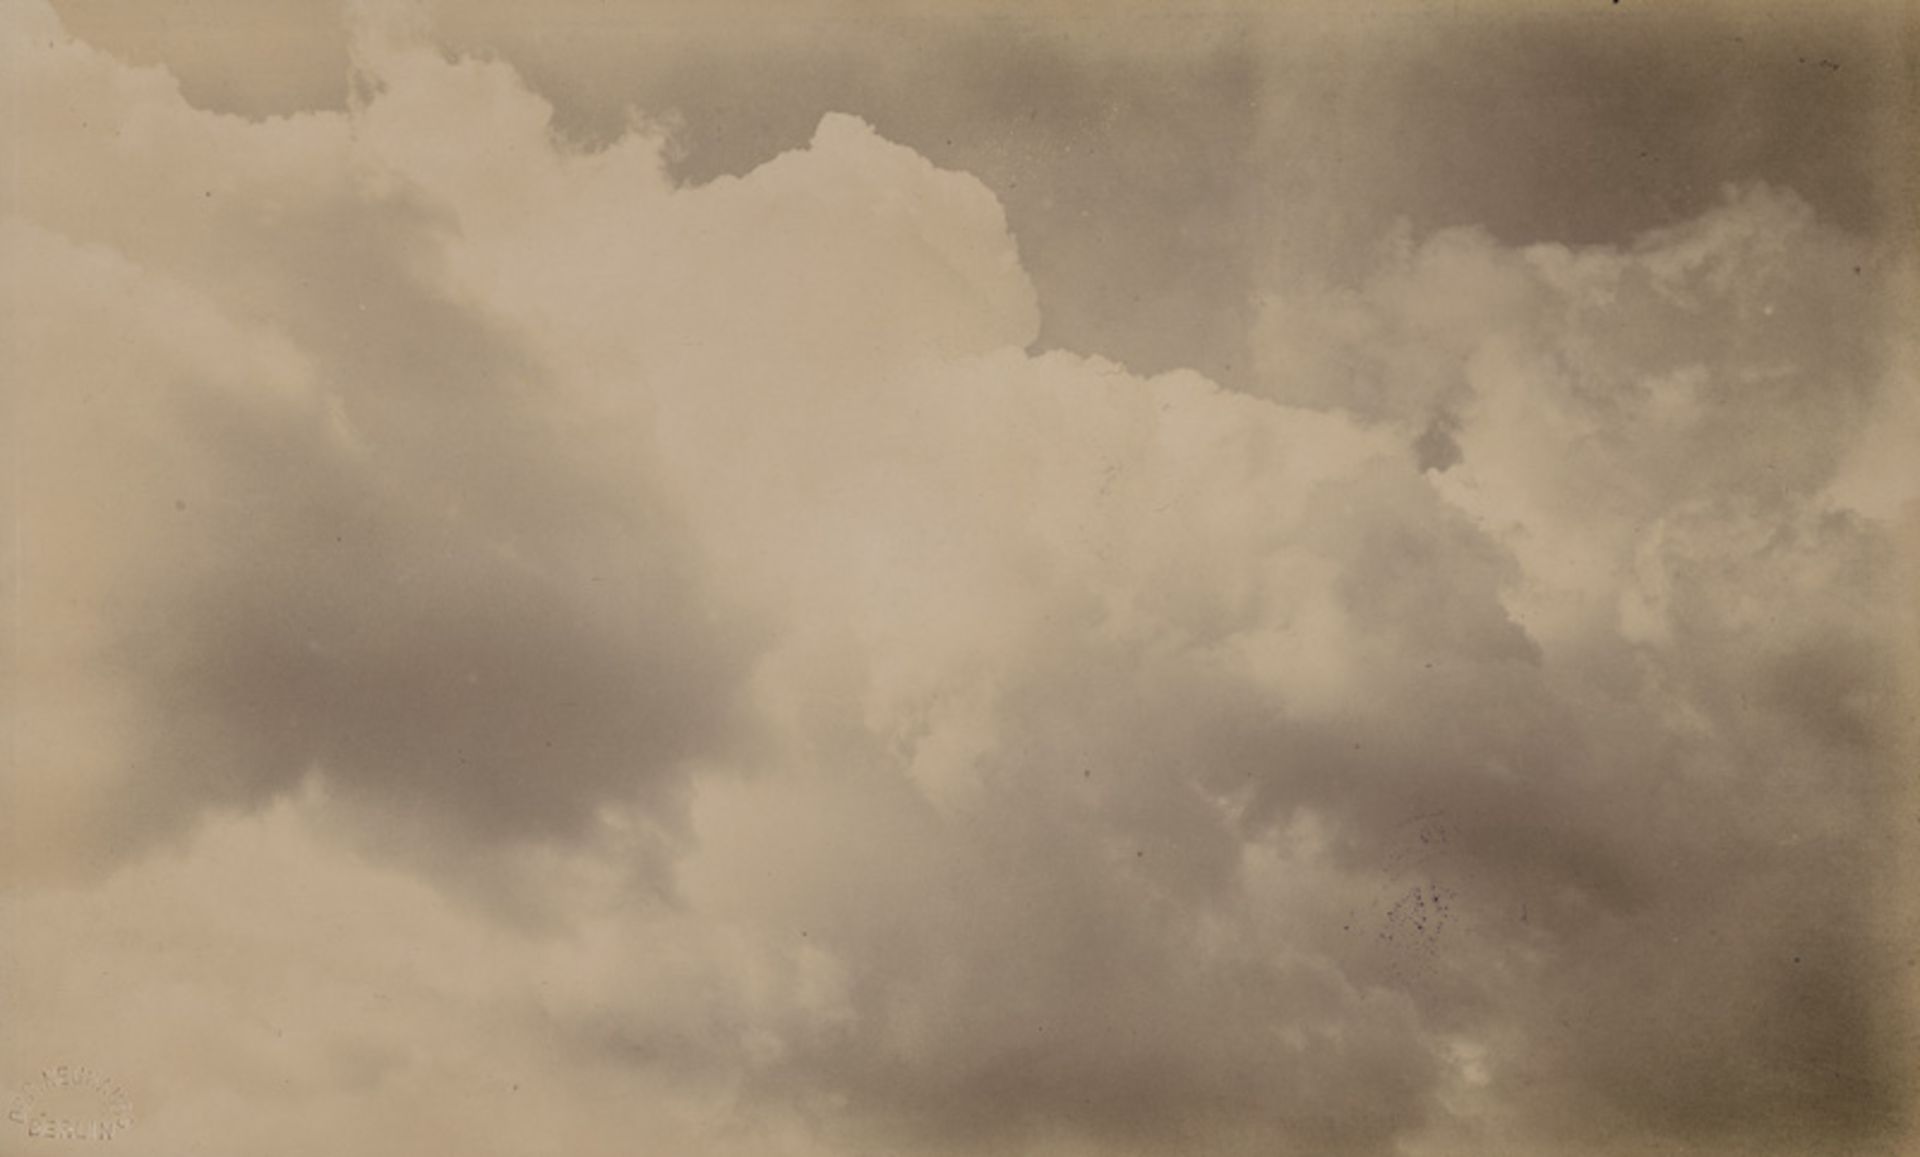 Neuhauss, Dr. Richard Gustav: Selected images from the "Wolken-Atlas" (Cloud Atlas) - Image 2 of 5